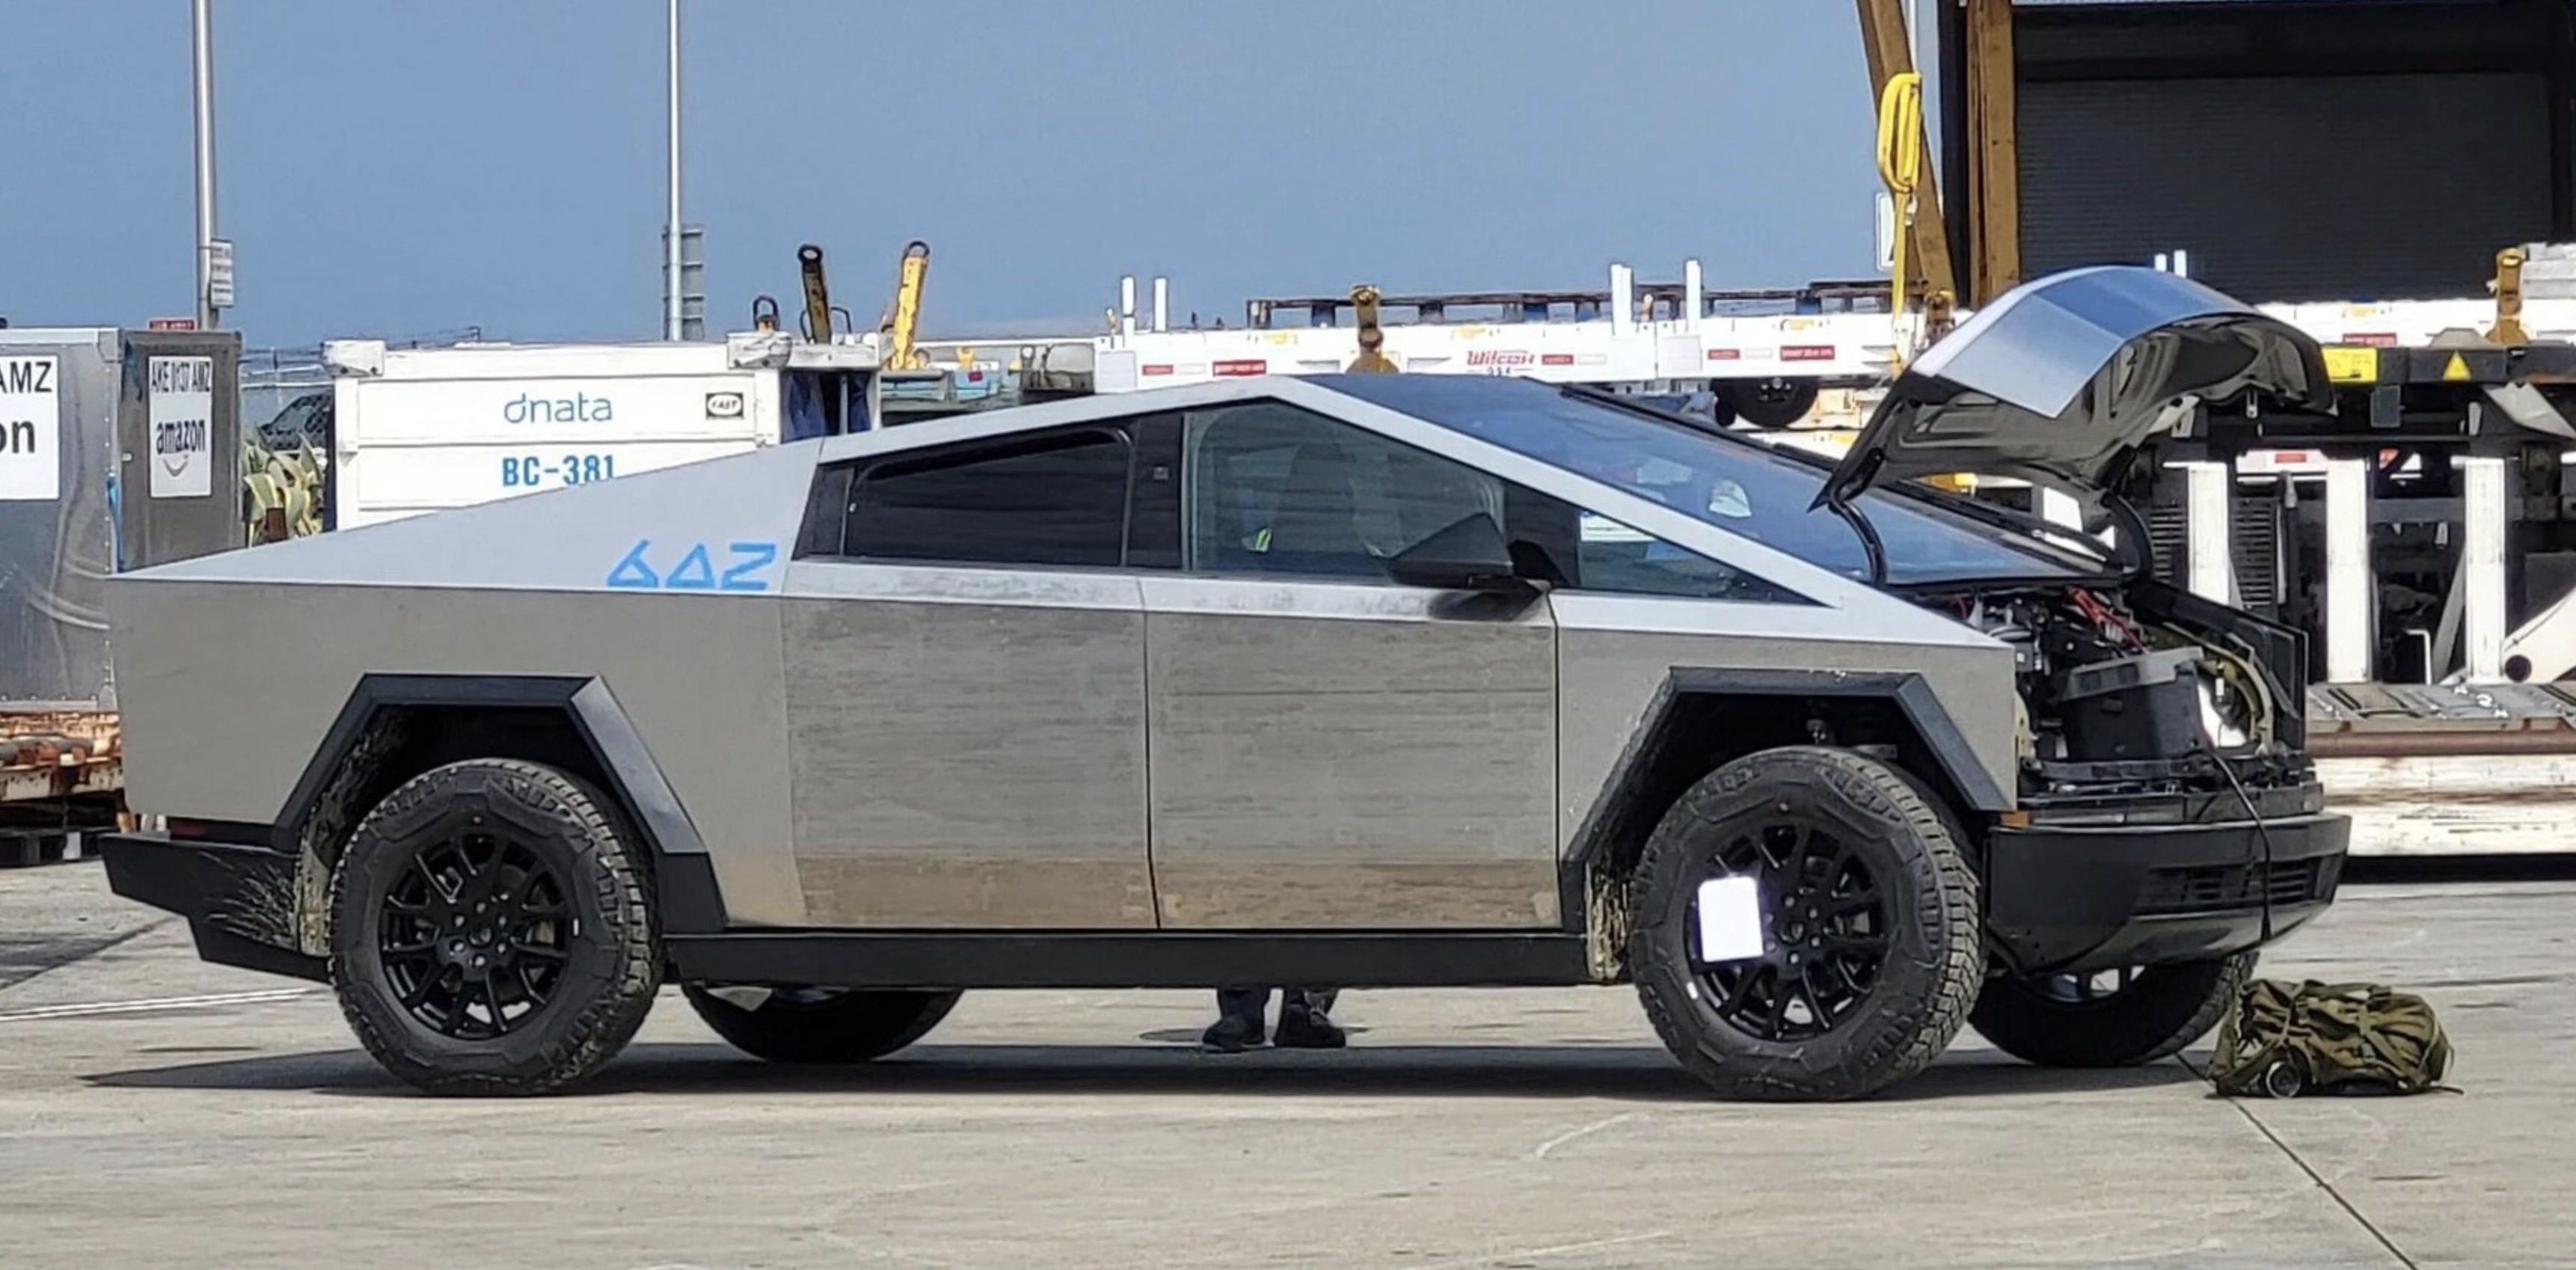 Tesla is testing Cybertruck with dual-motor powertrain, interior look